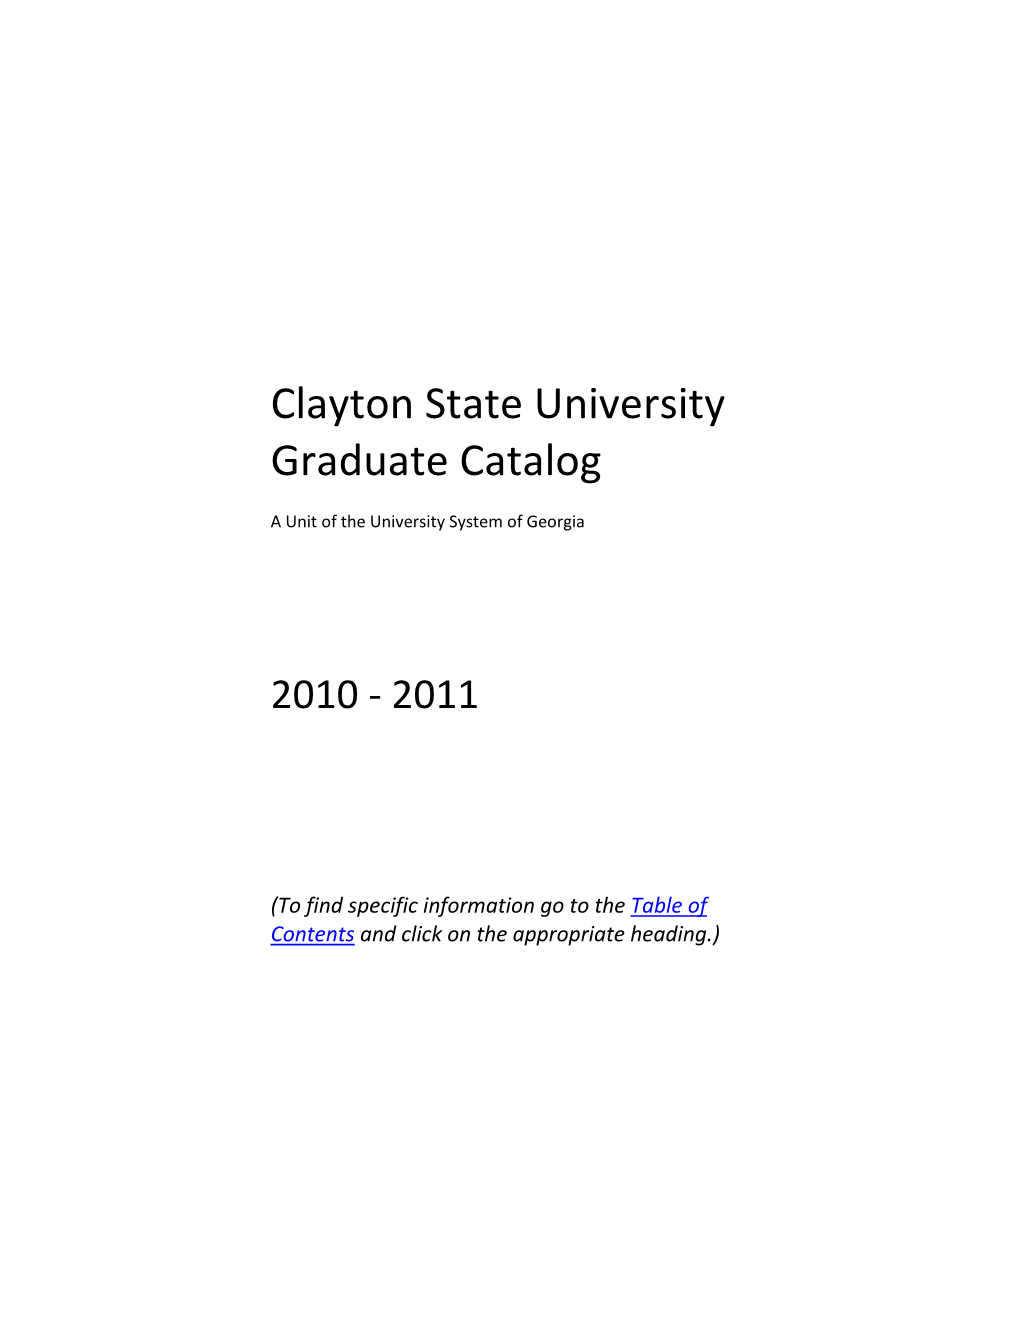 2010-2011 Academic Year